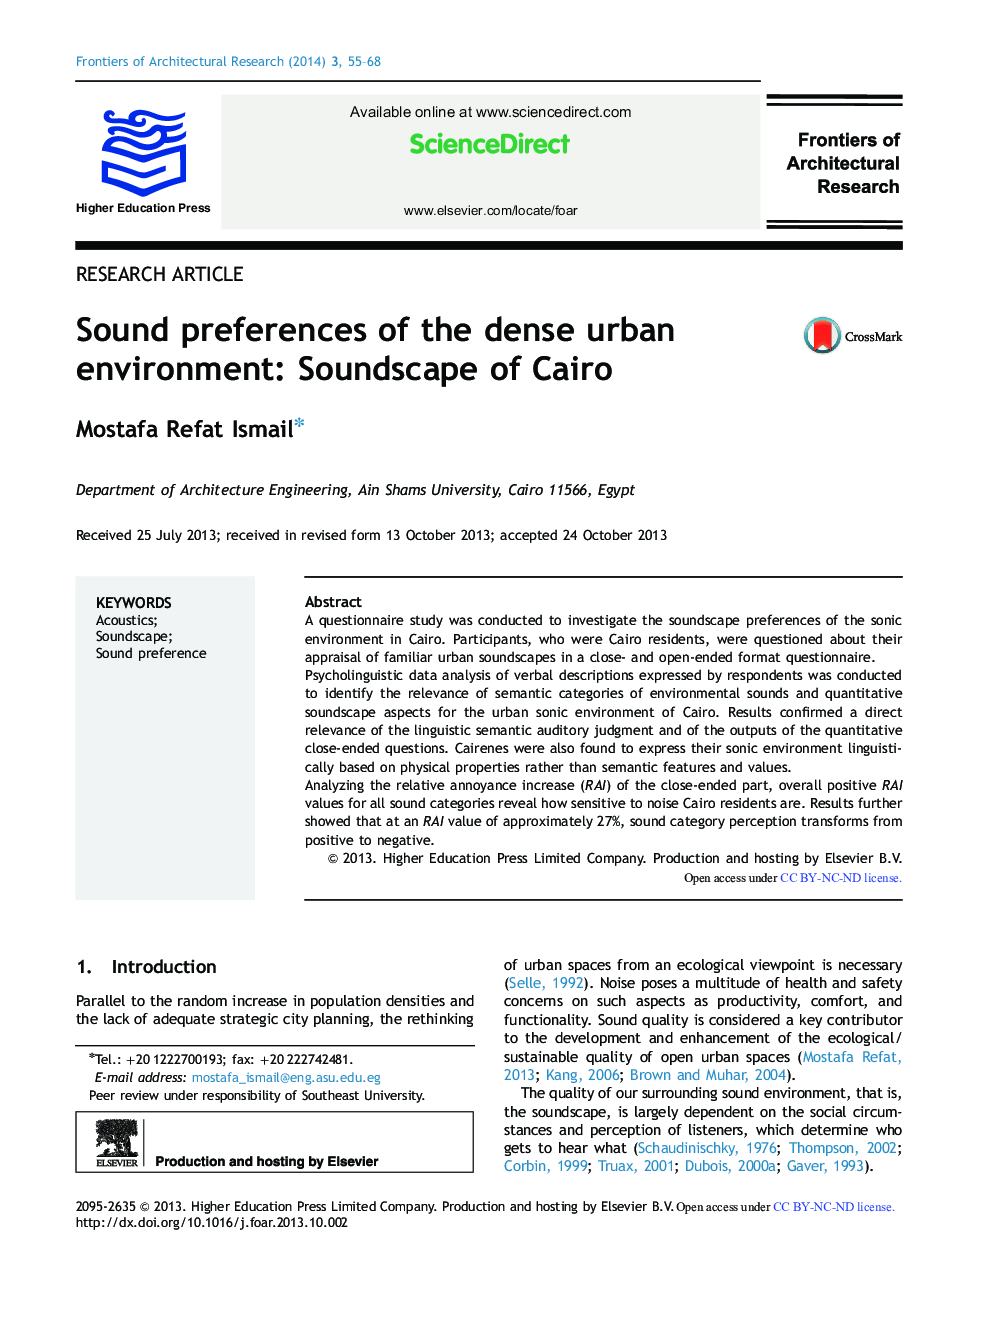 Sound preferences of the dense urban environment: Soundscape of Cairo 